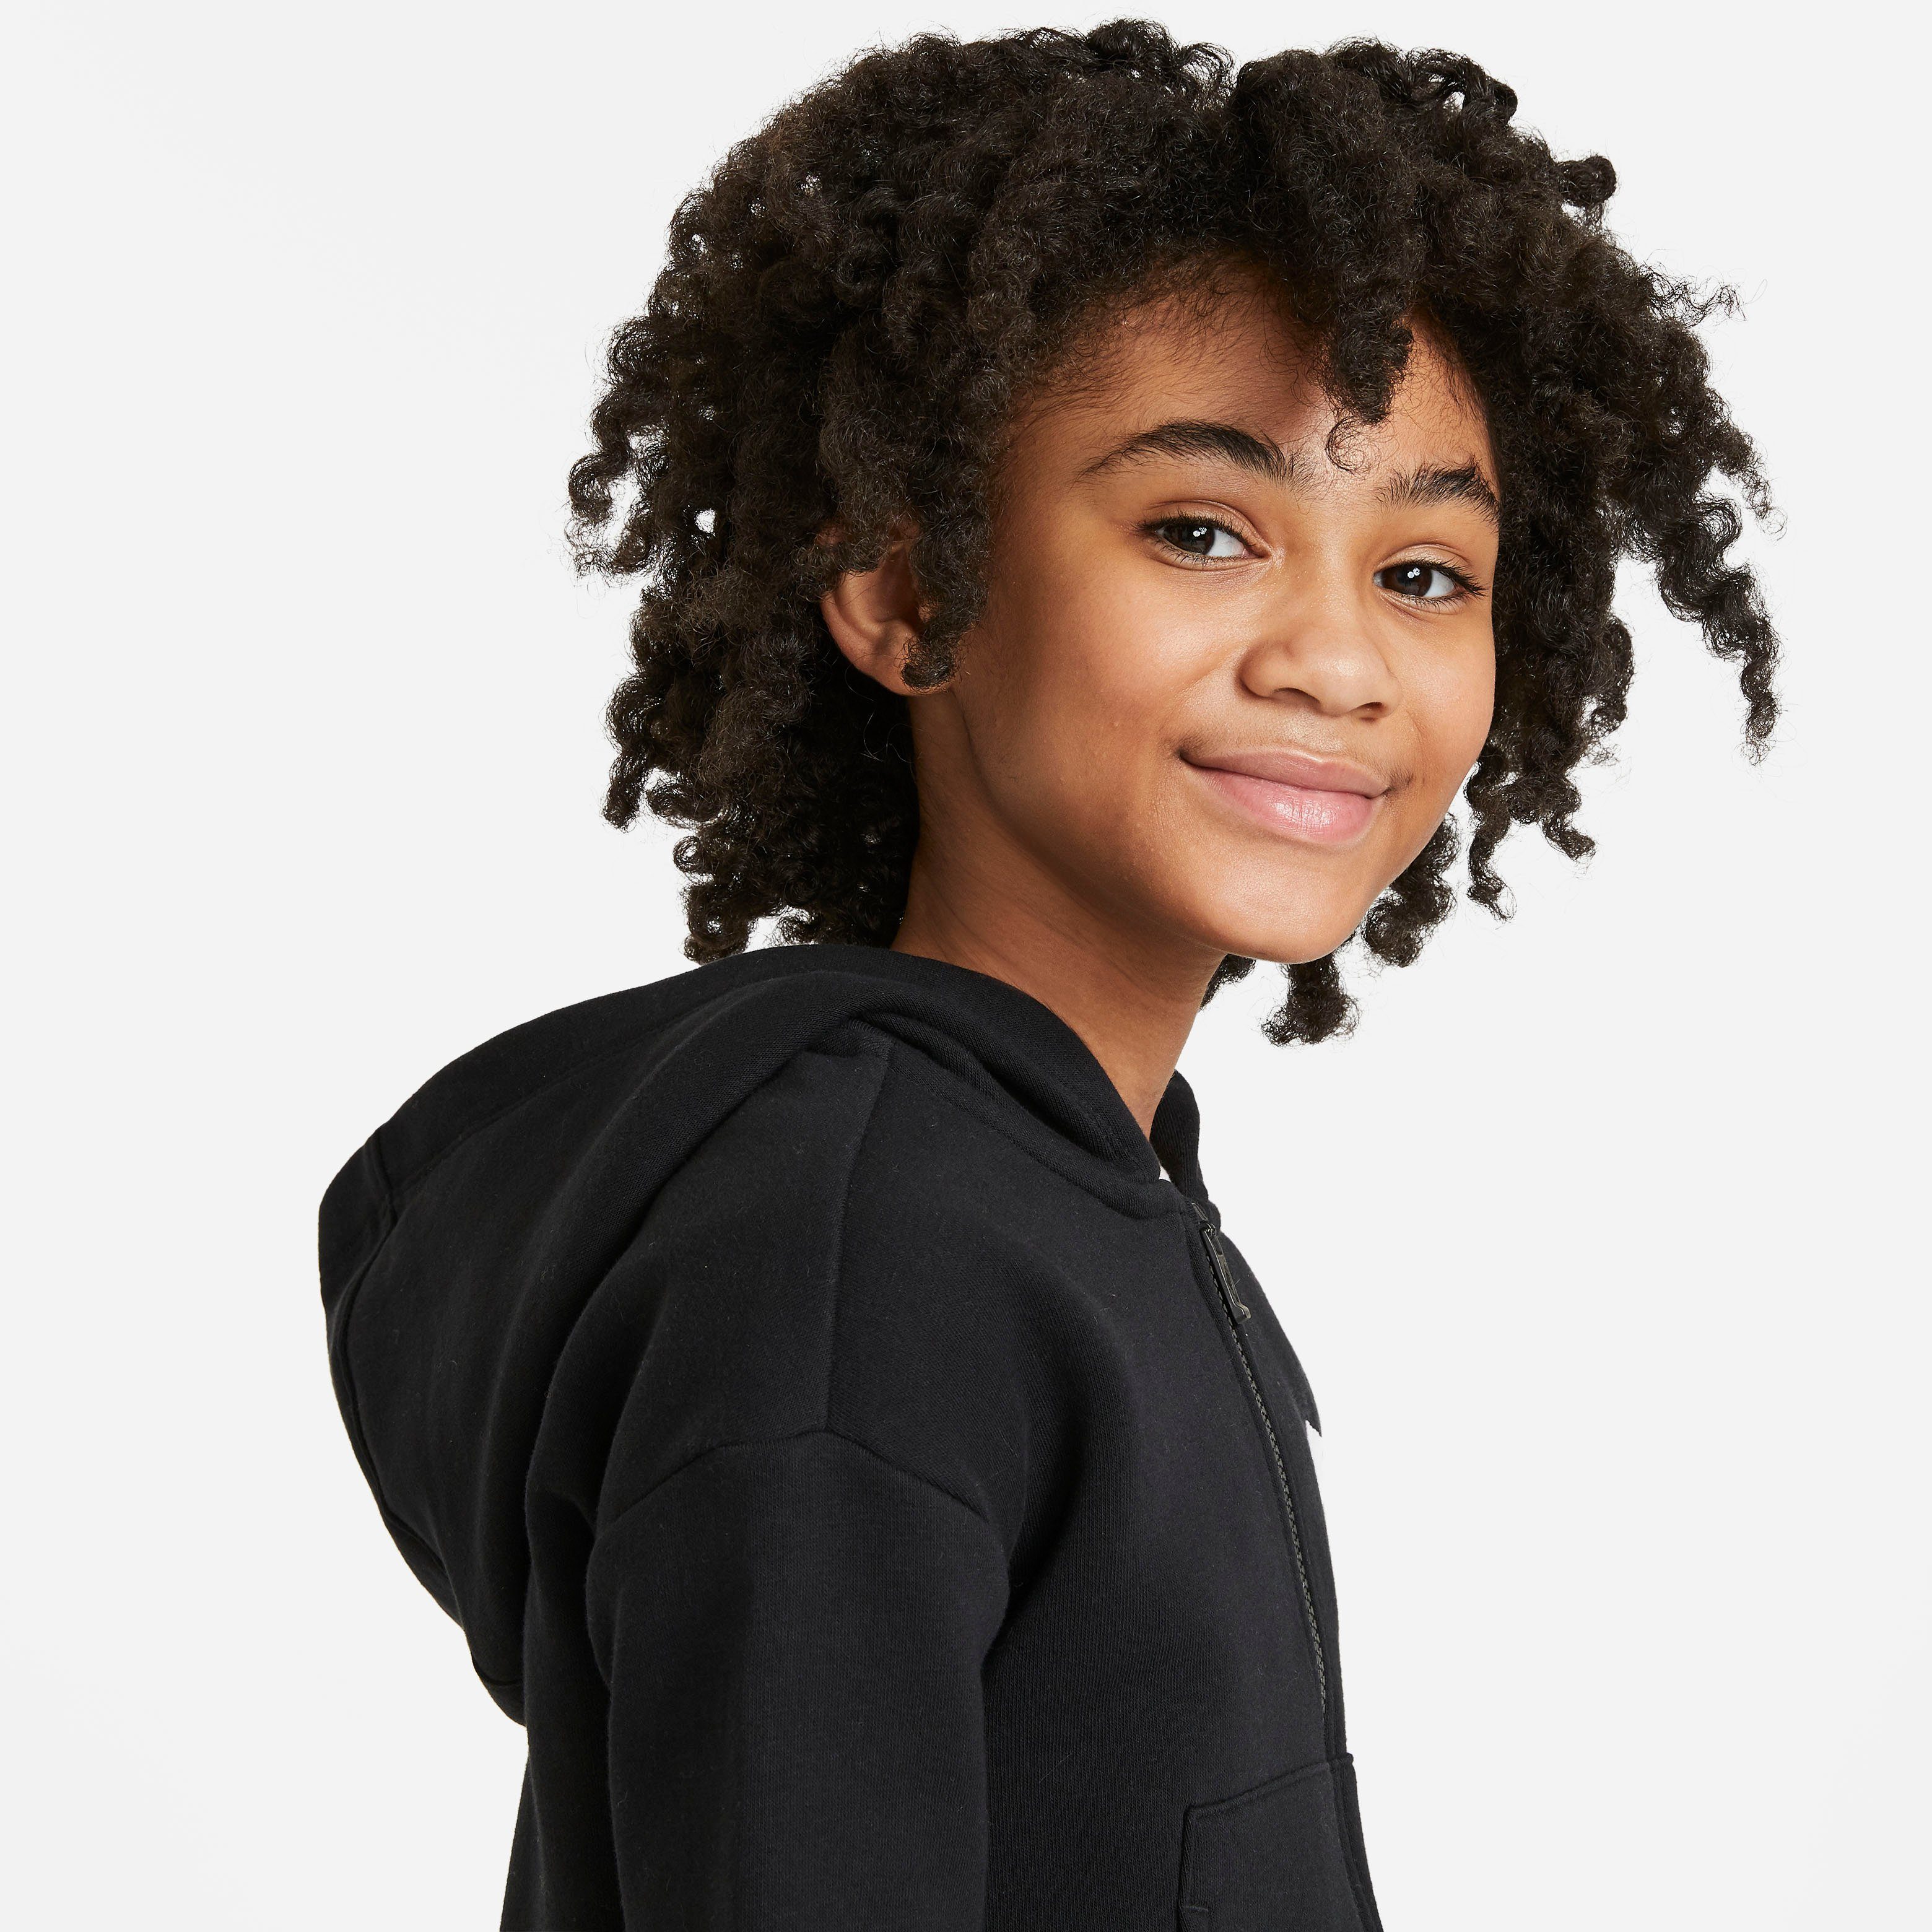 Nike Sportswear Kapuzensweatjacke Club Hoodie (Girls) schwarz Full-Zip Big Kids' Fleece